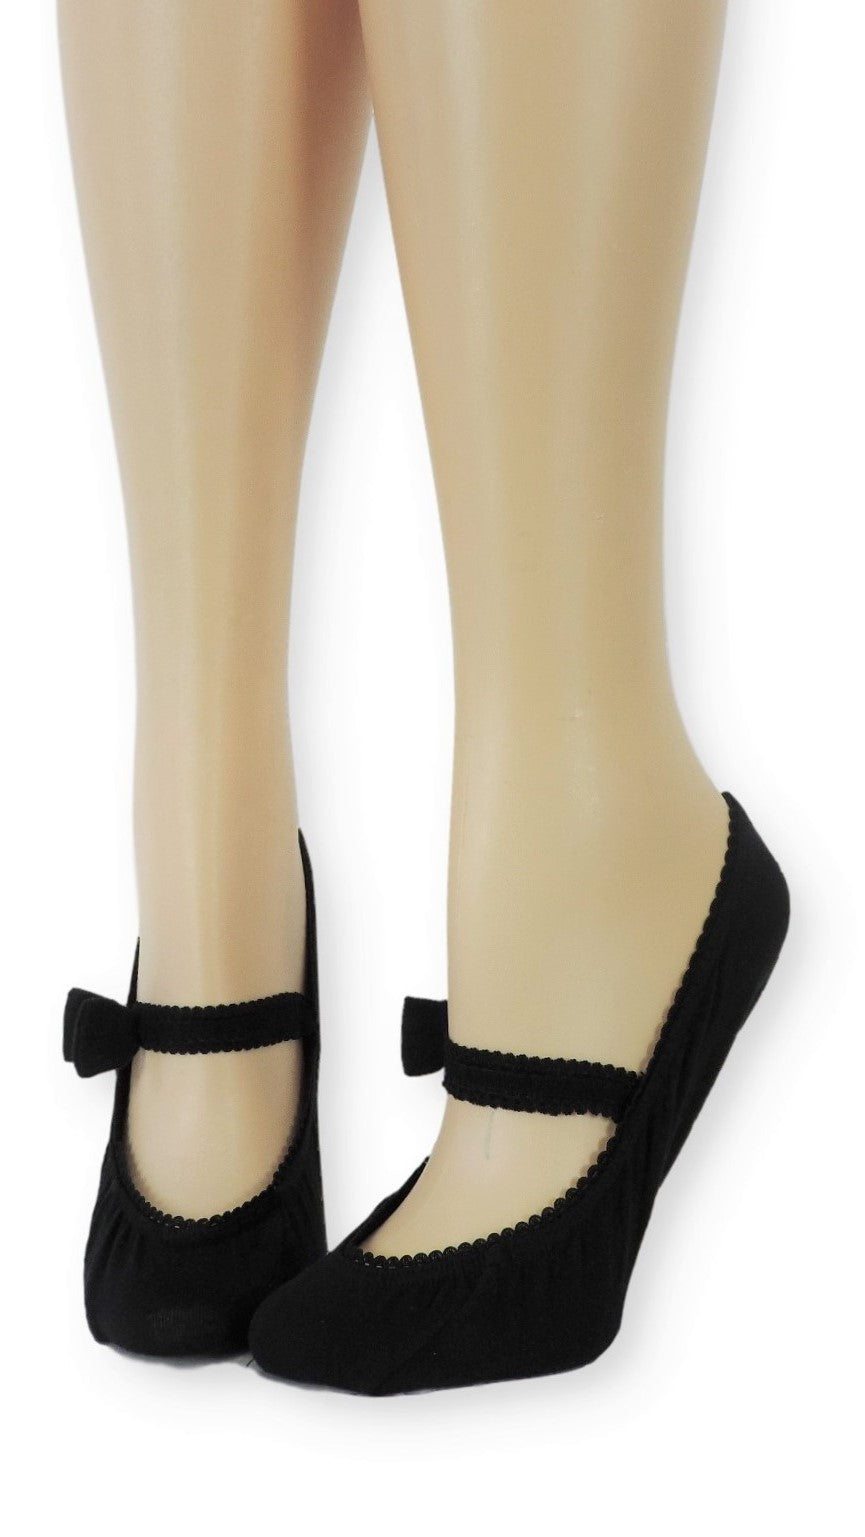 Darknight Ankle Socks with Bow Strap - Global Trendz Fashion®